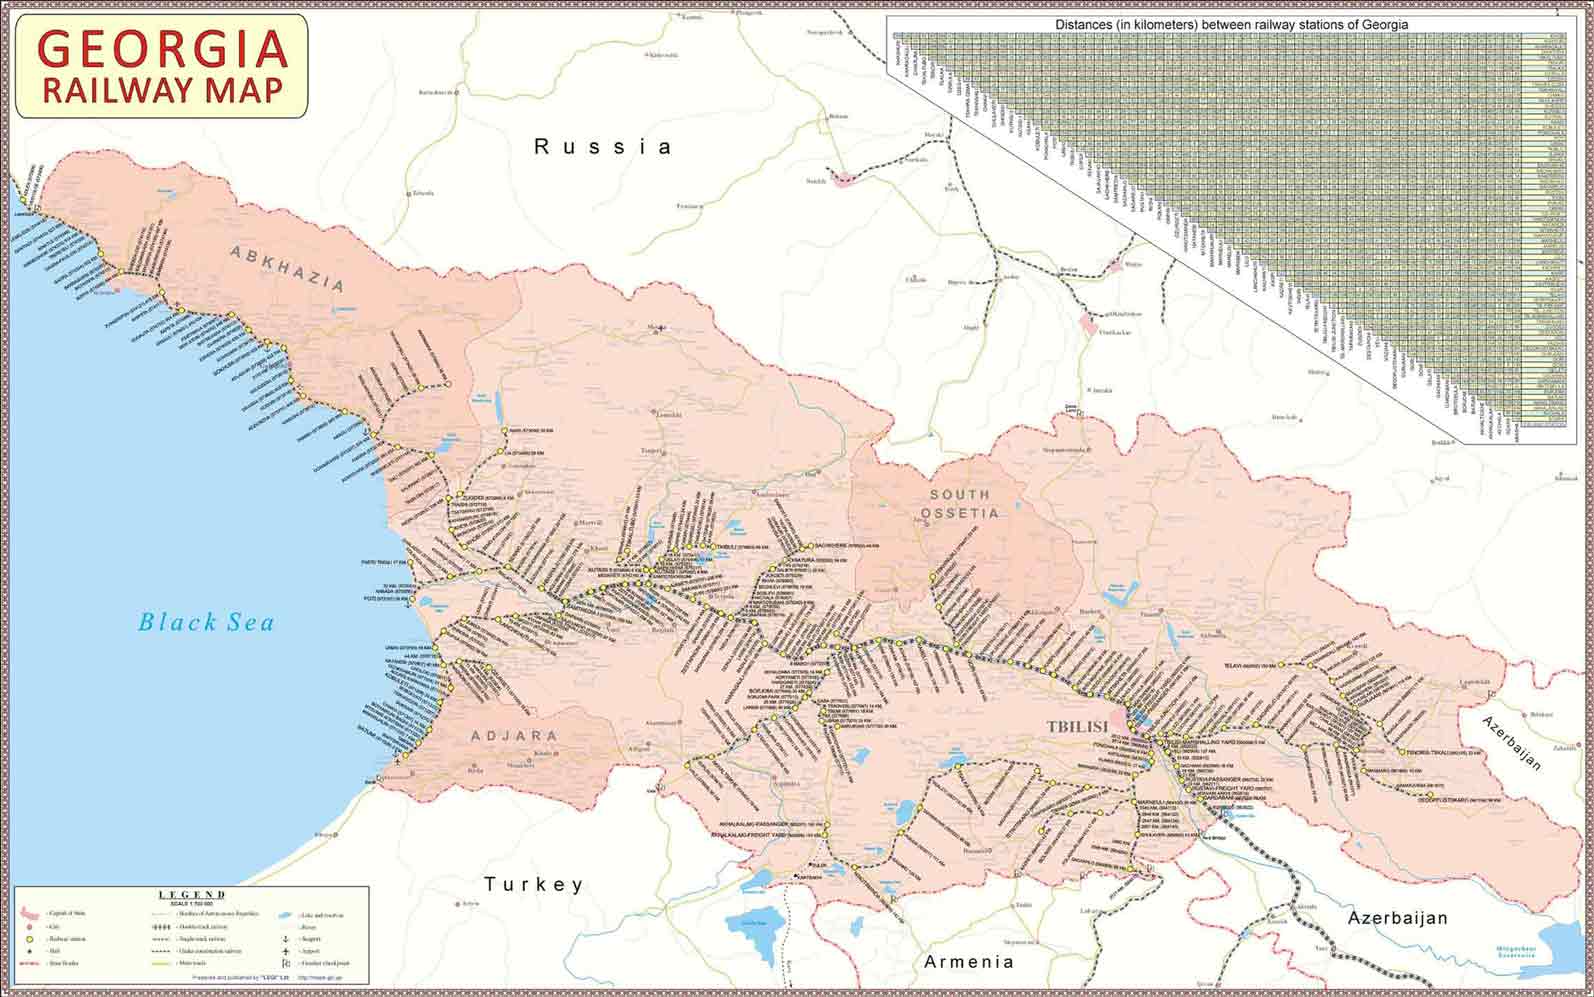 GEORGIA RAILWAY MAP